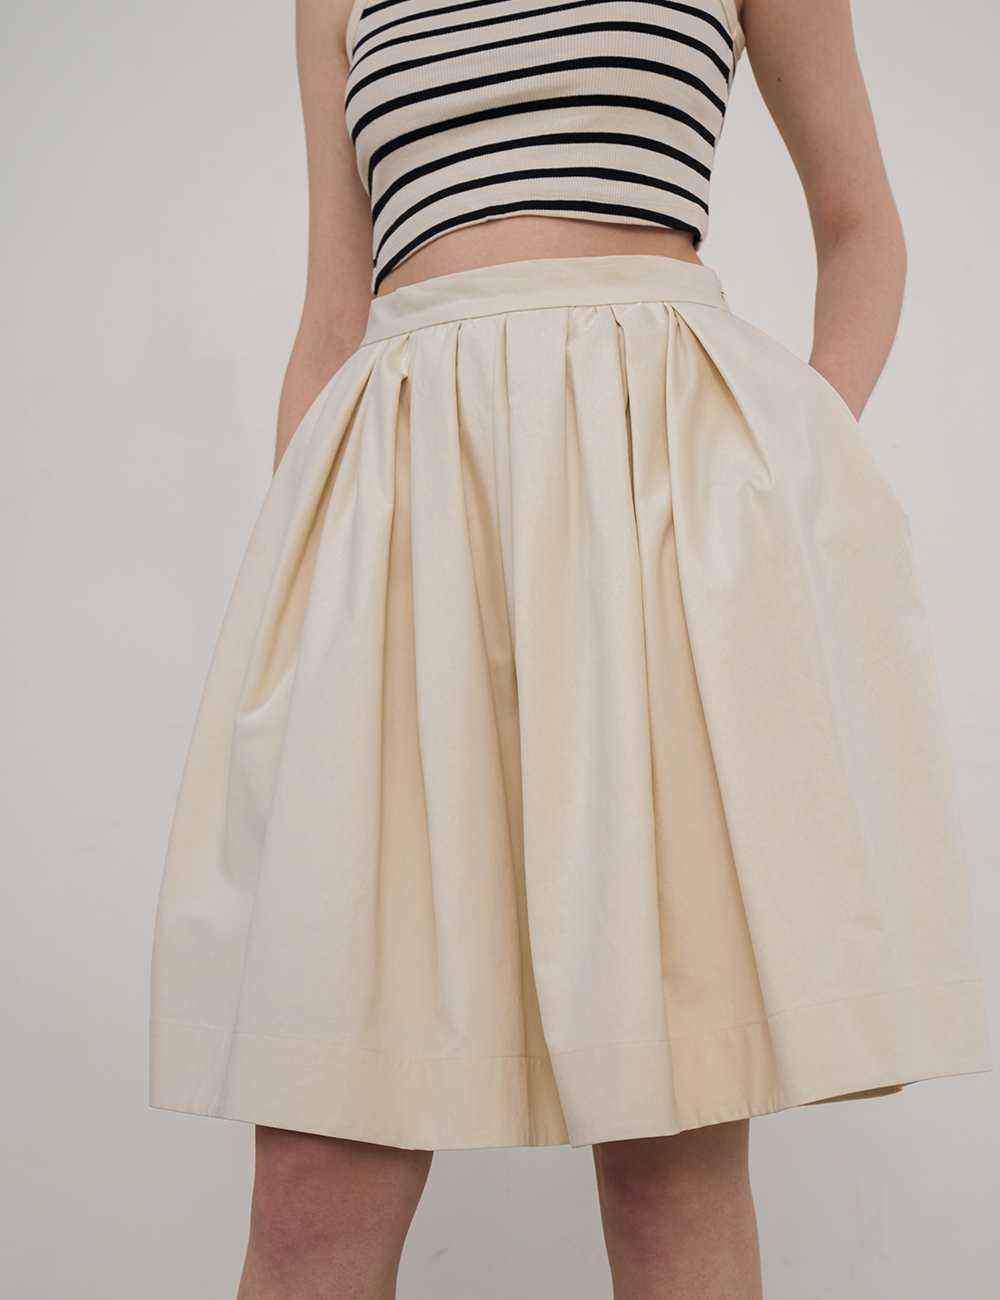 Bonnie Full Skirt (Cream)